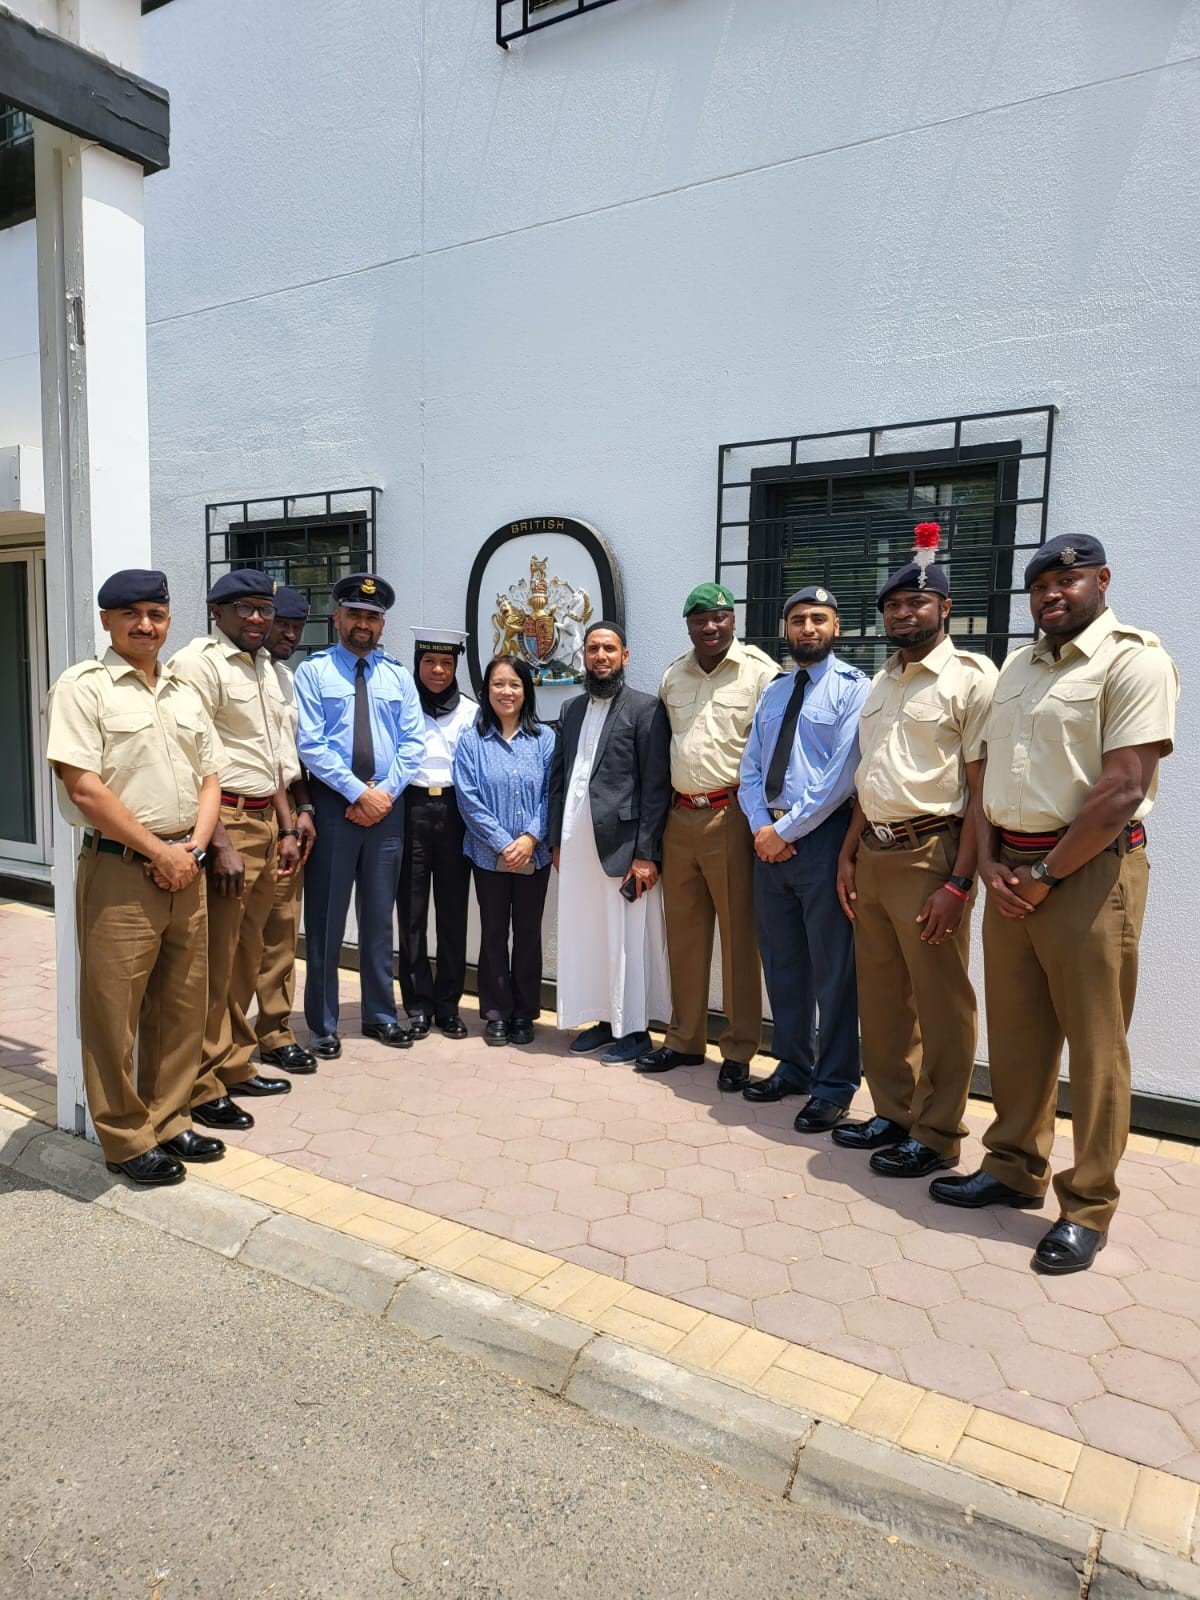 The delegation met the British Consul General in Jeddah, Cecil El Belidi.